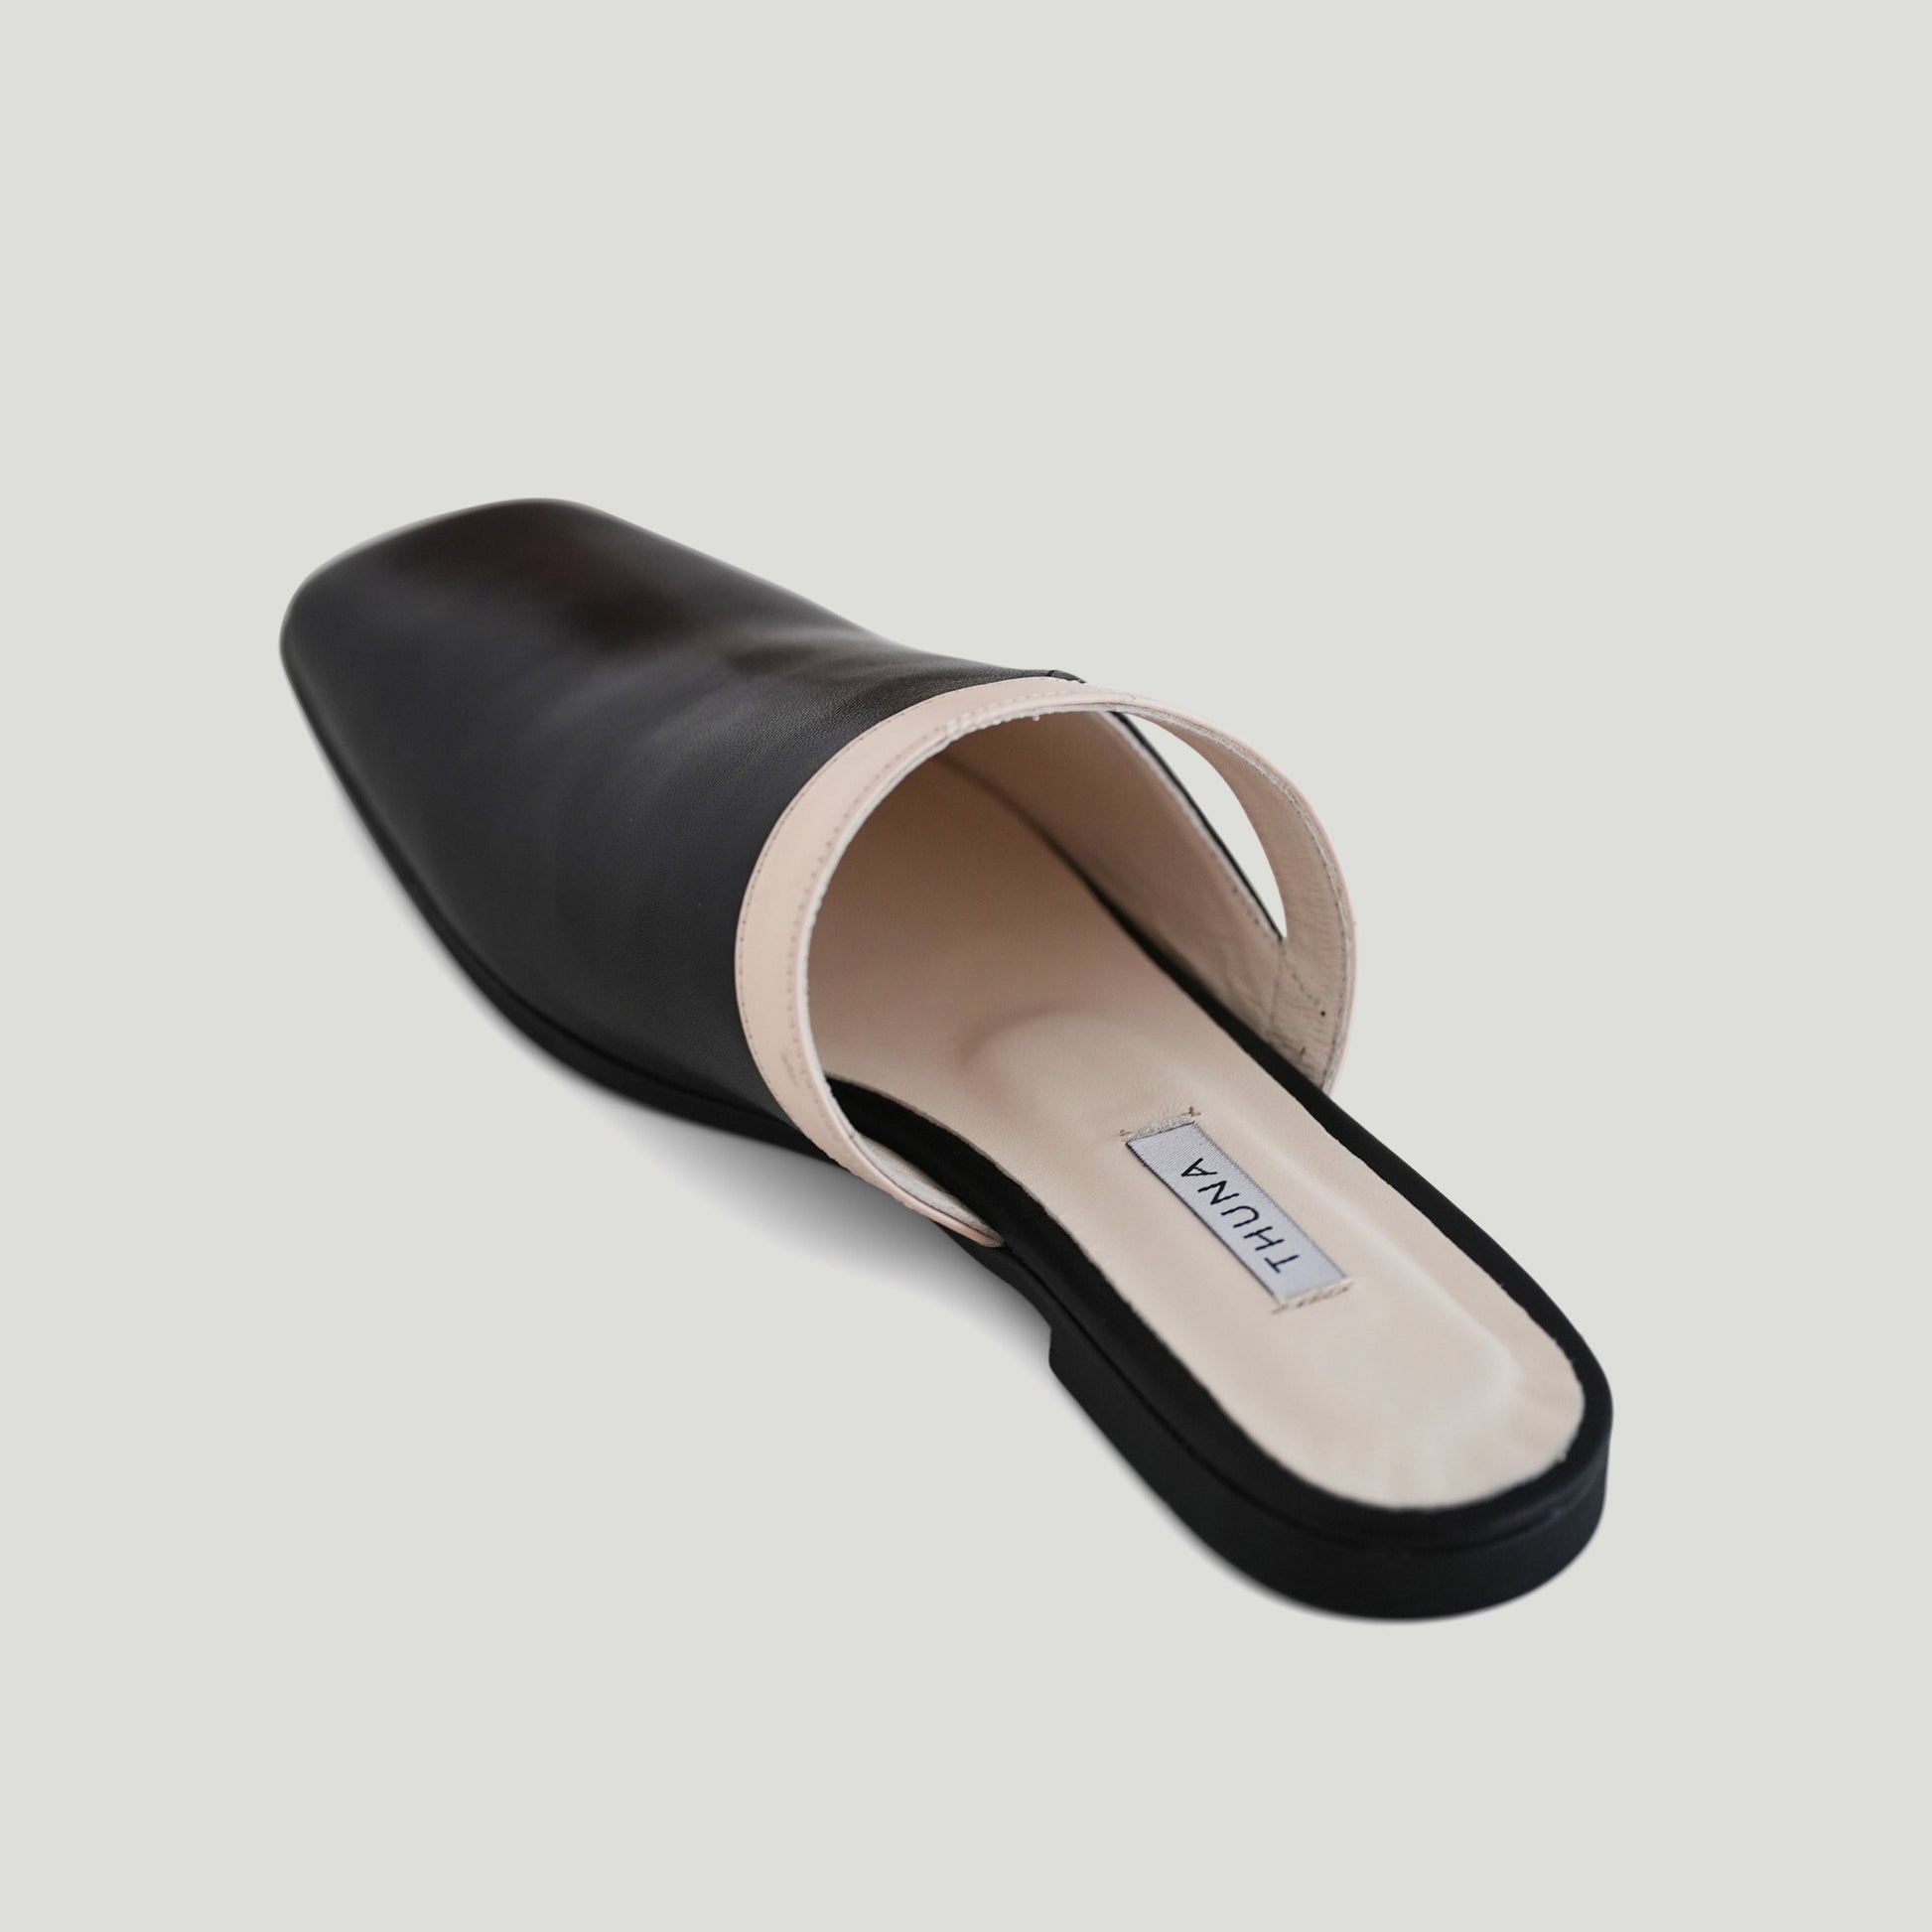 wid - black - mule ramadan collection- kuwait- ksa- shoes